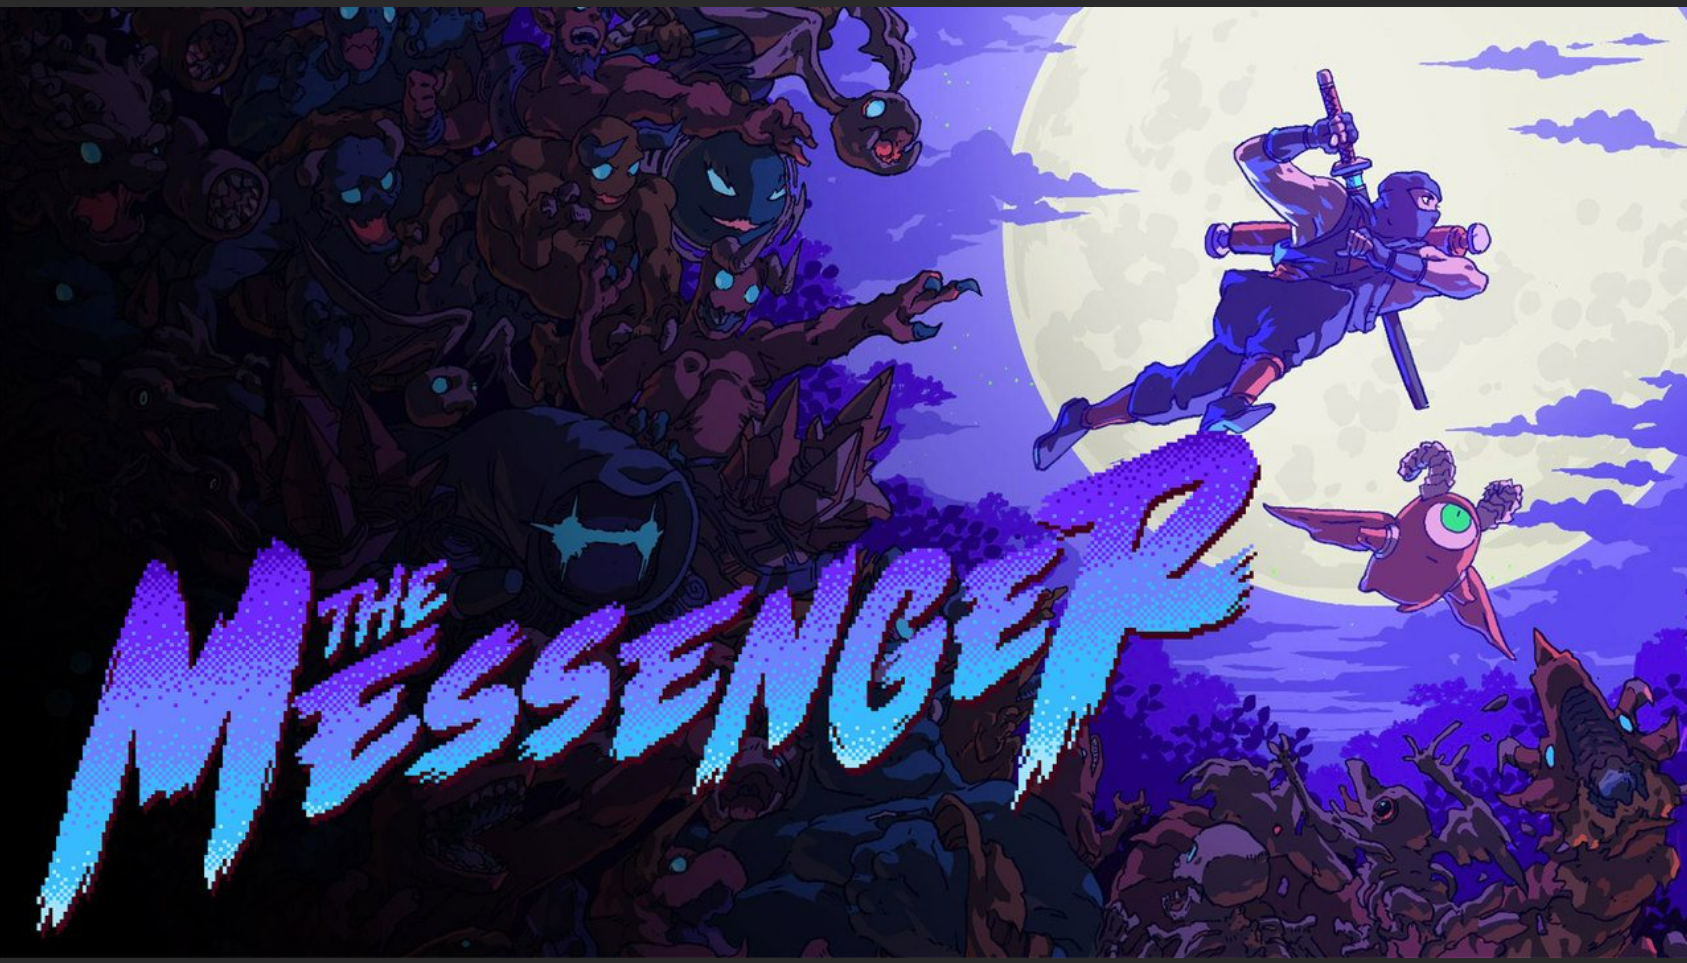 The messenger игра. The Messenger арт игры. The Messenger геймплей. The Messenger обои.